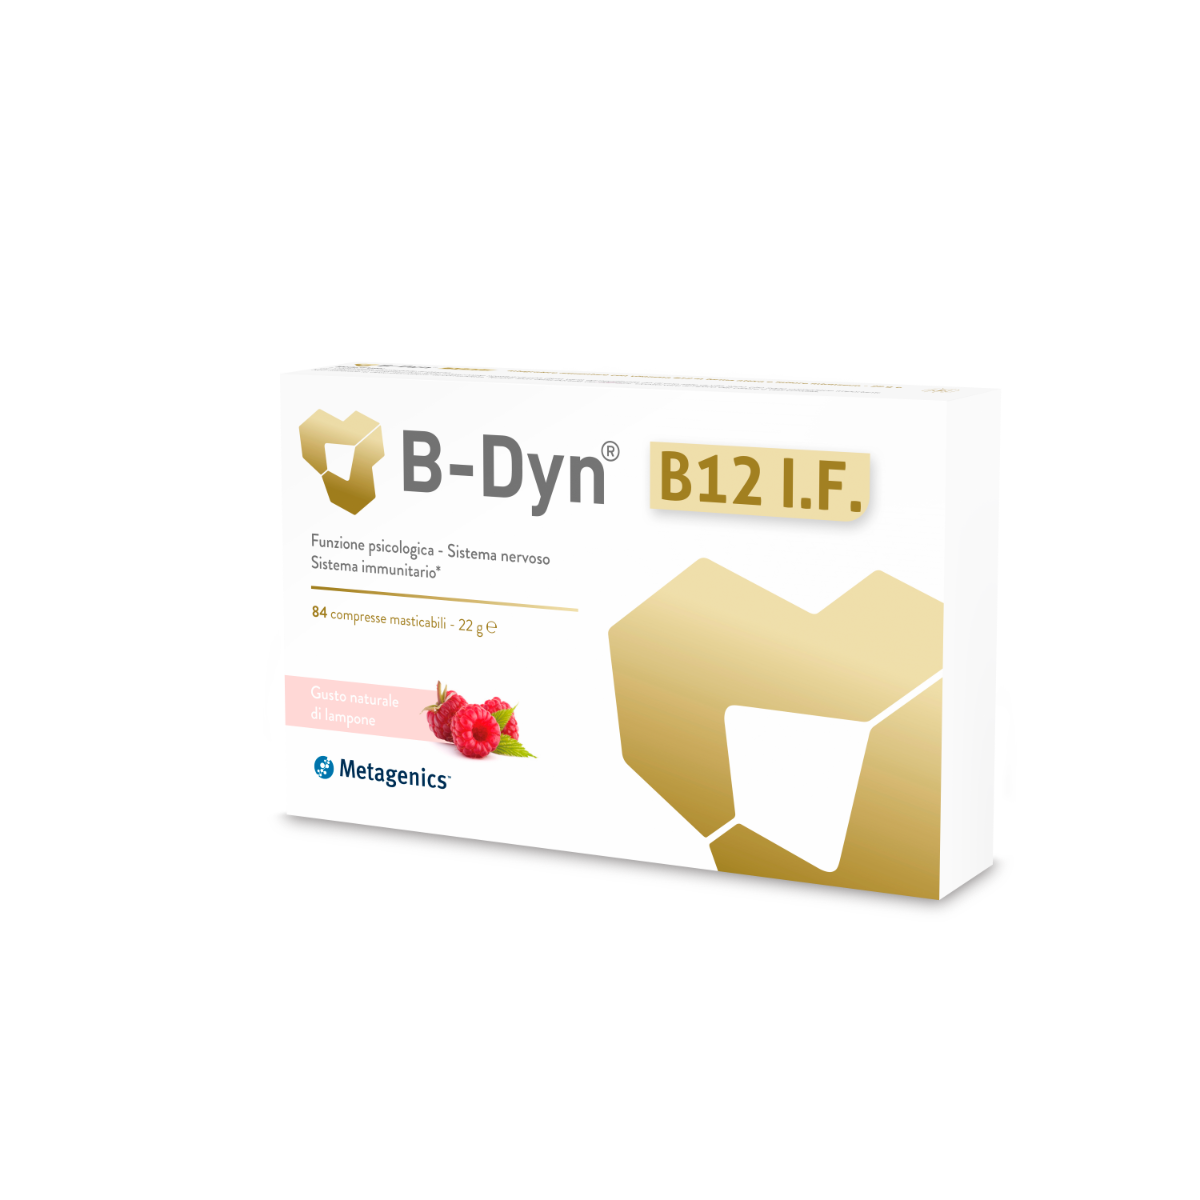 Metagenics B-Dyn B12 IF 84 Compresse Masticabili